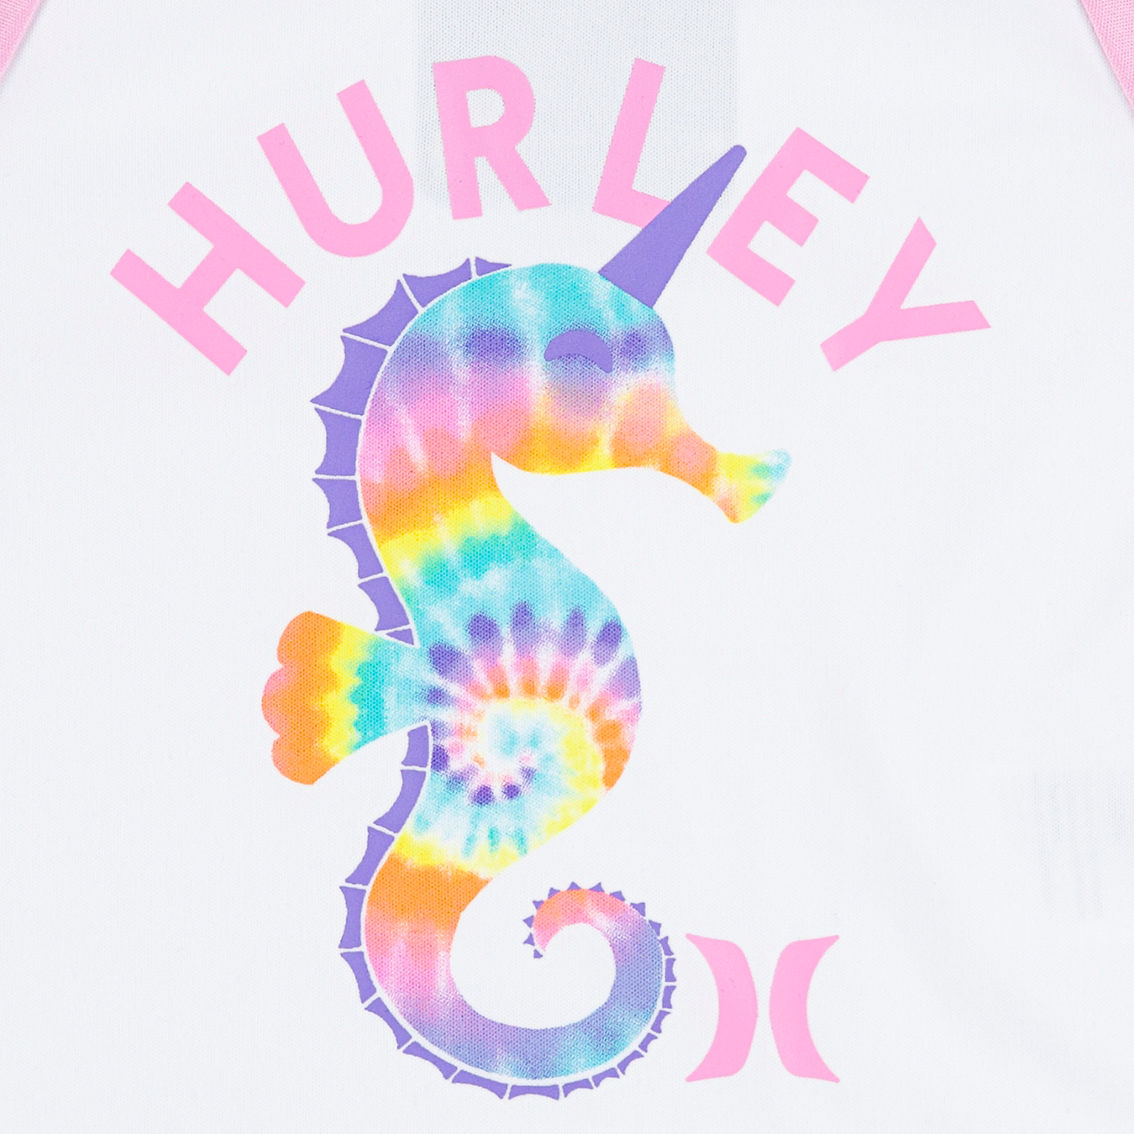 Hurley Baby Girls Knotted UPF 50+ 3 pc. Swim Set - Image 5 of 5